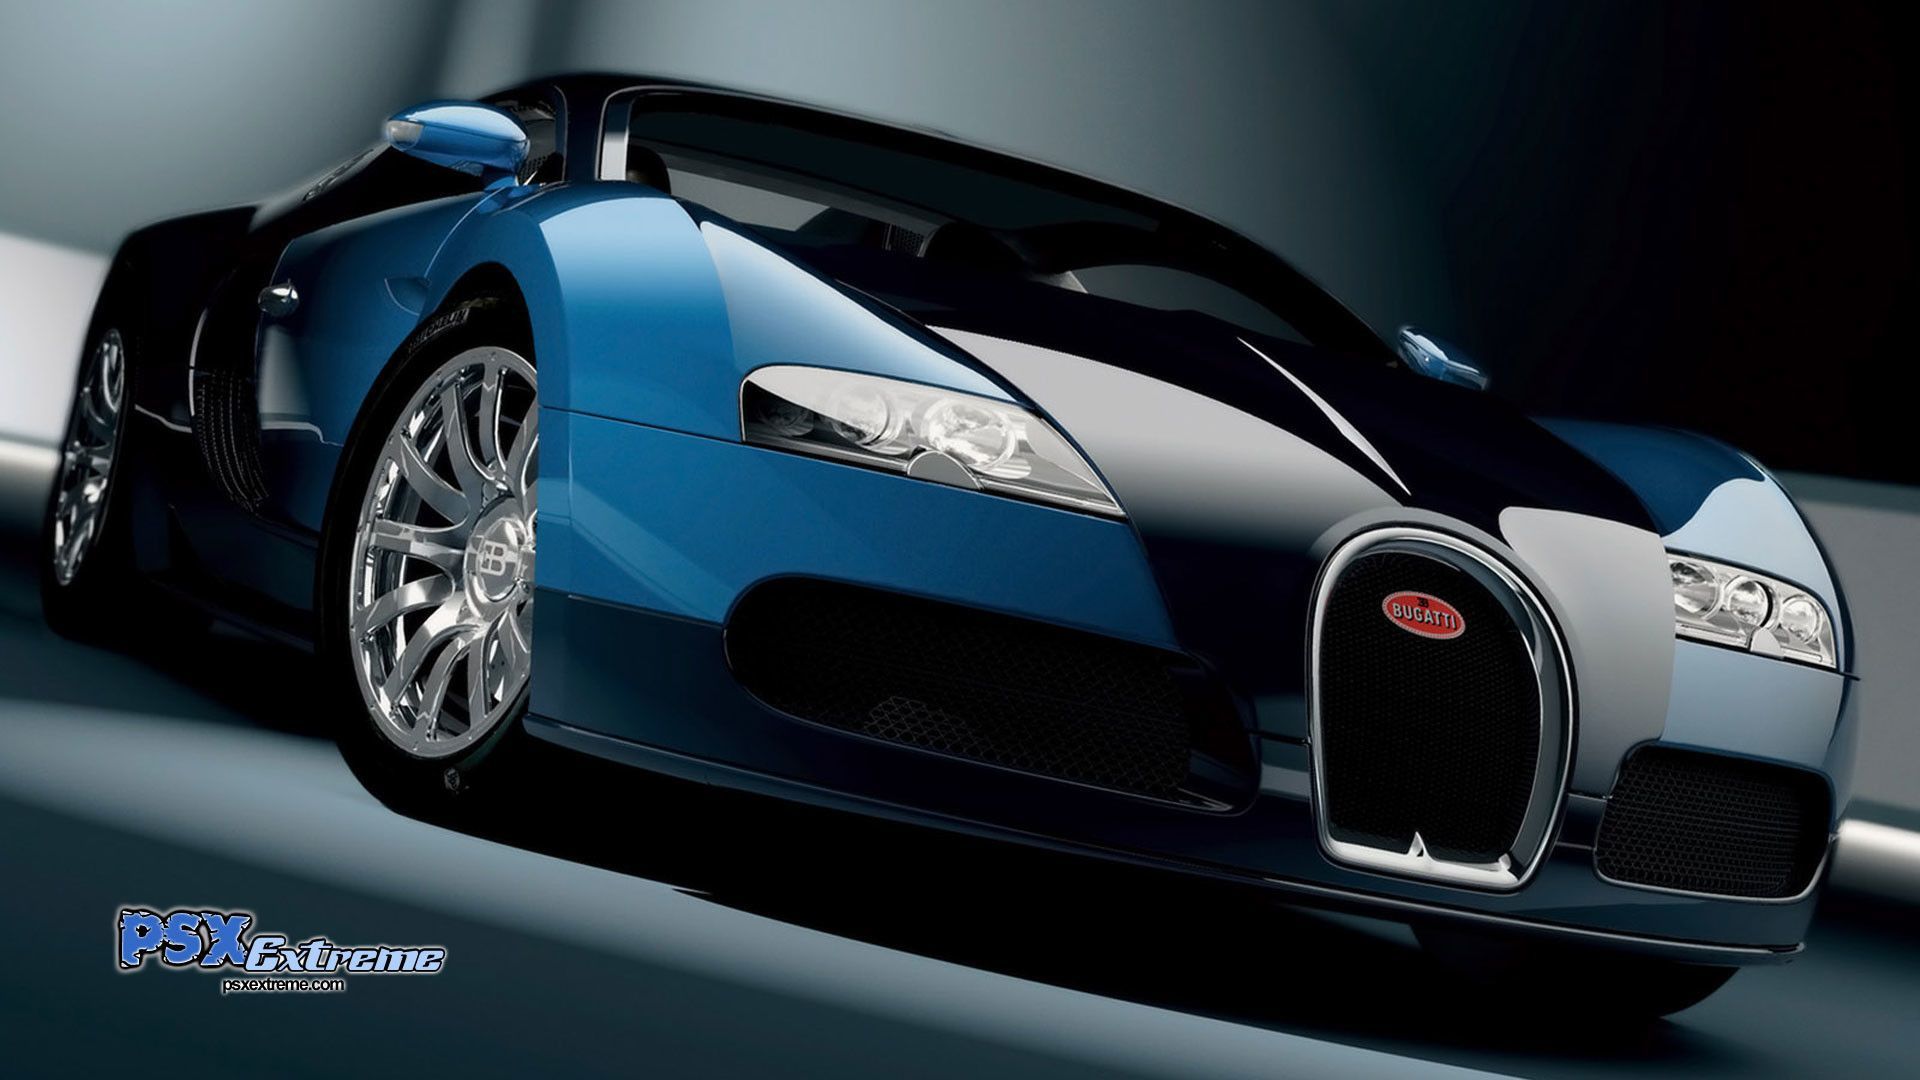 Bugatti Veyron Super Sport Wallpapers